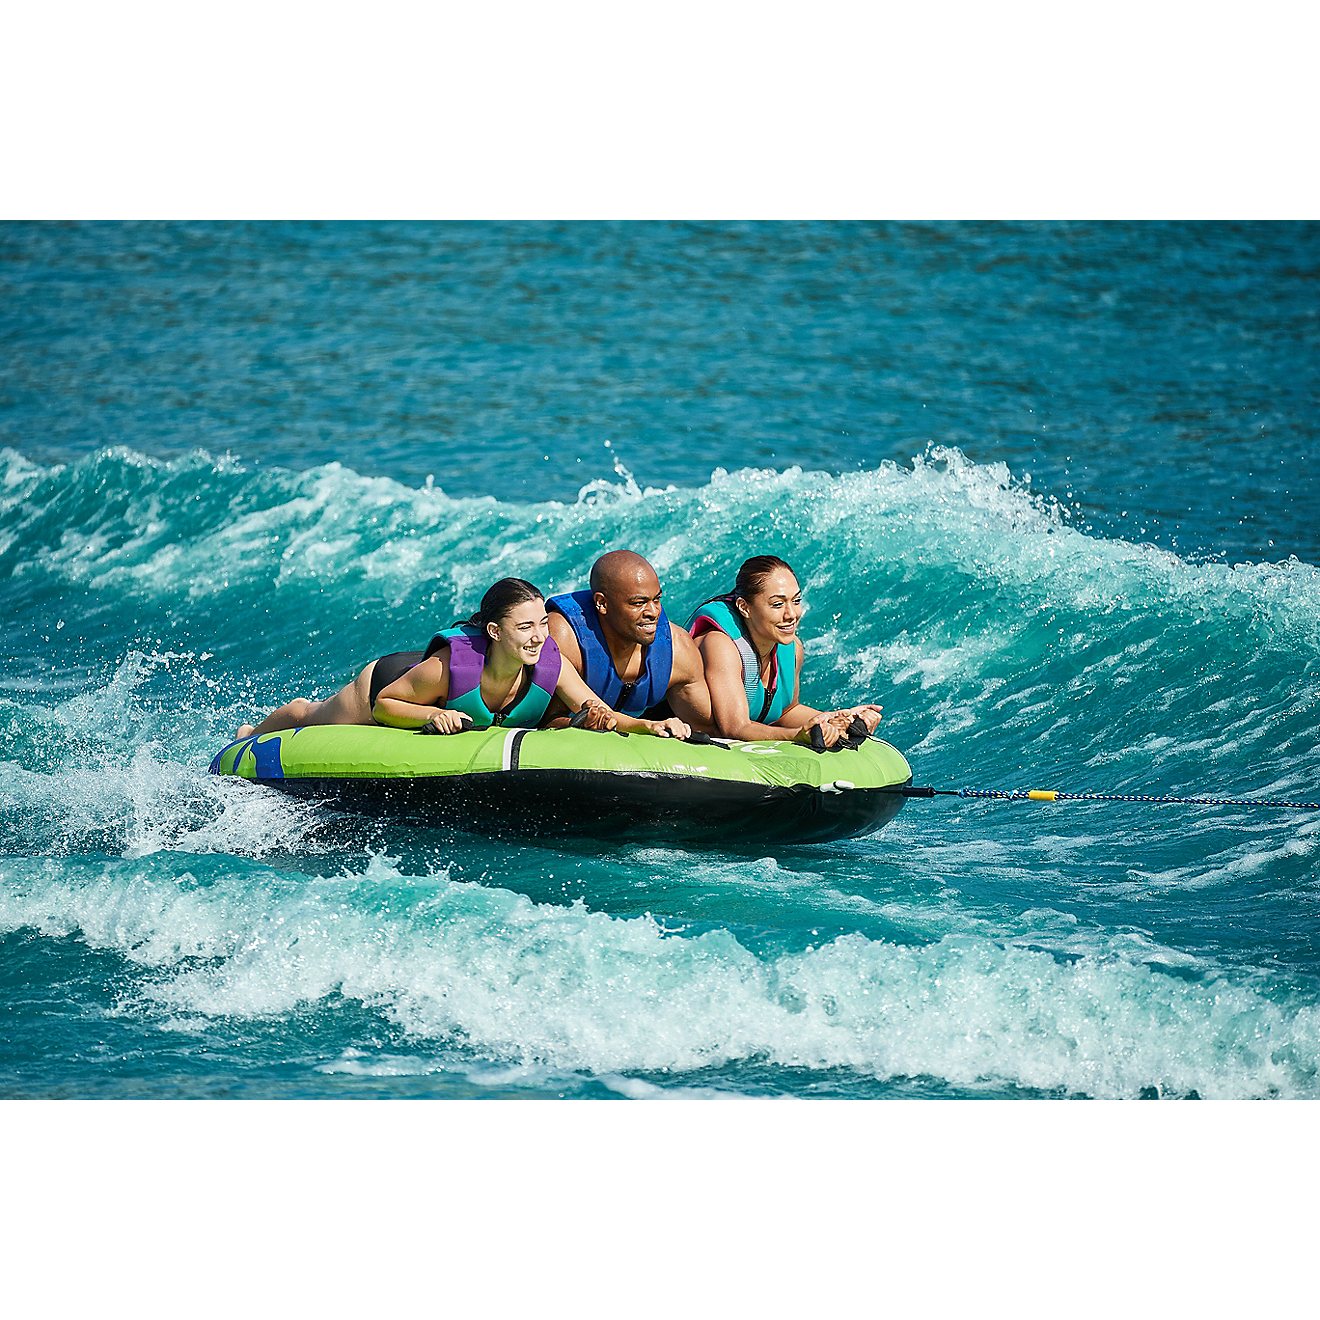 3 Riders Brand New O'rageous Sea Serpent III Inflatable Towable Tube 